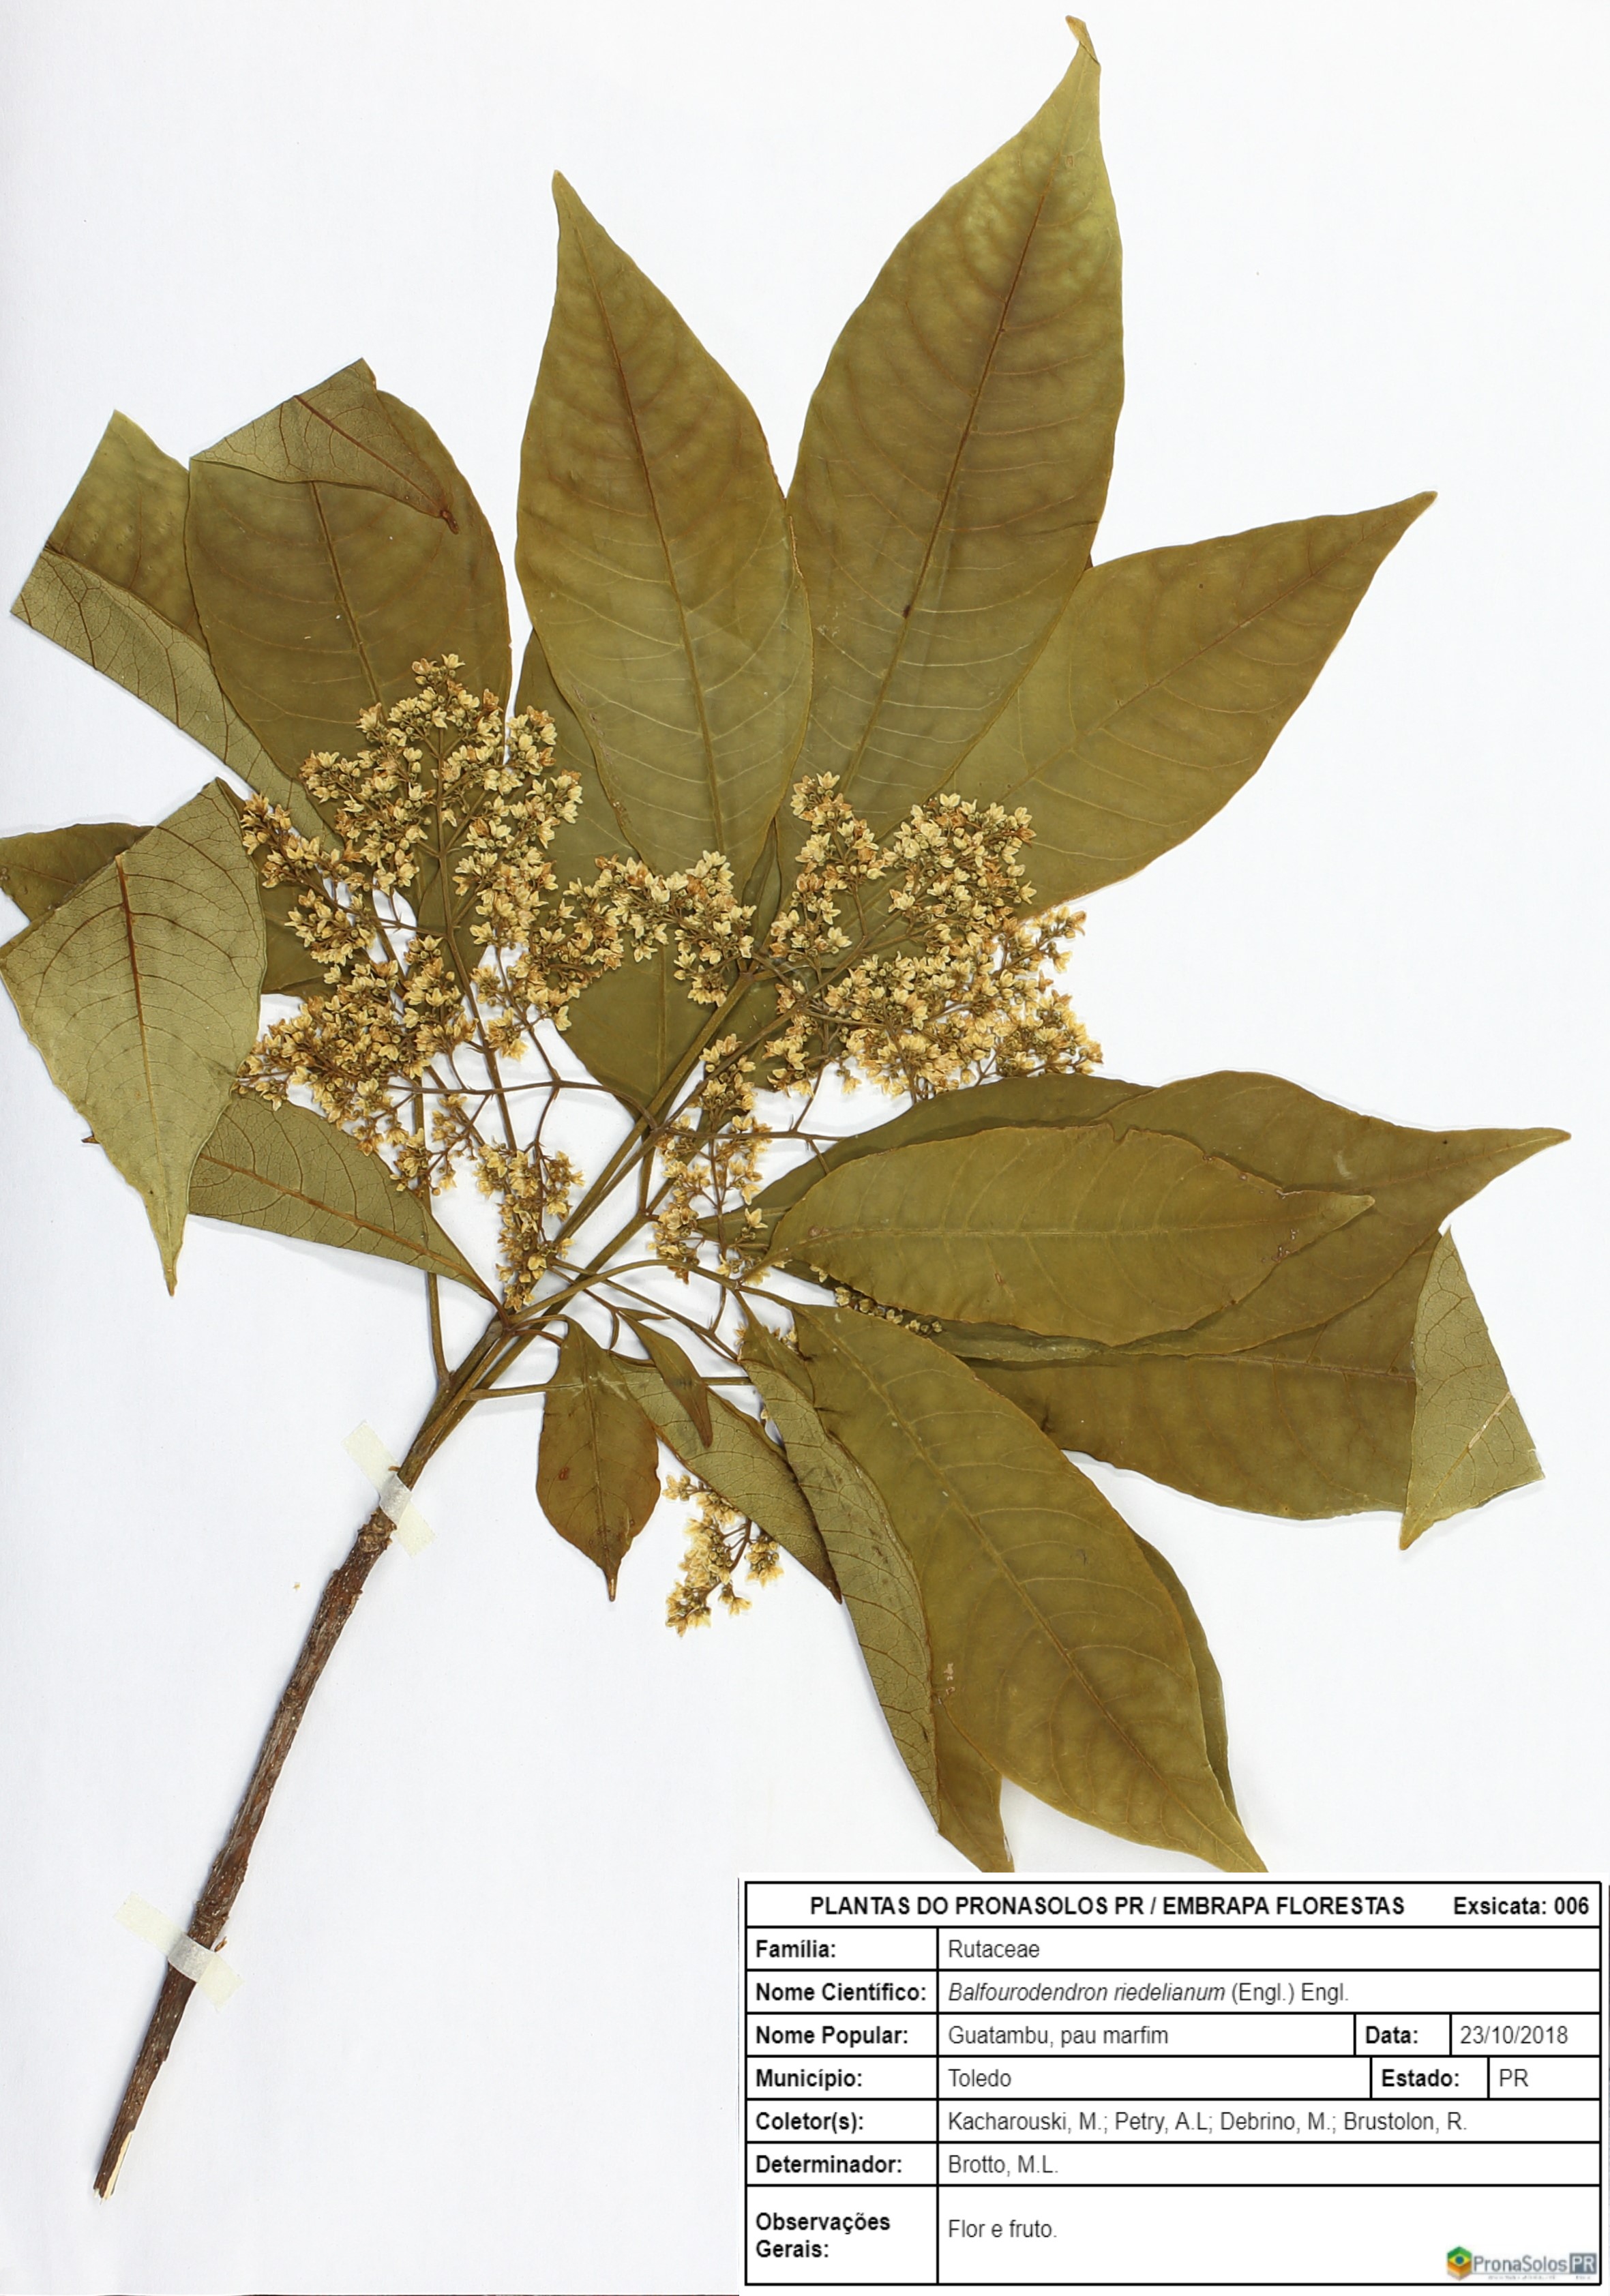 006_Balfourodendron riedelianum (Engl.) Engl.